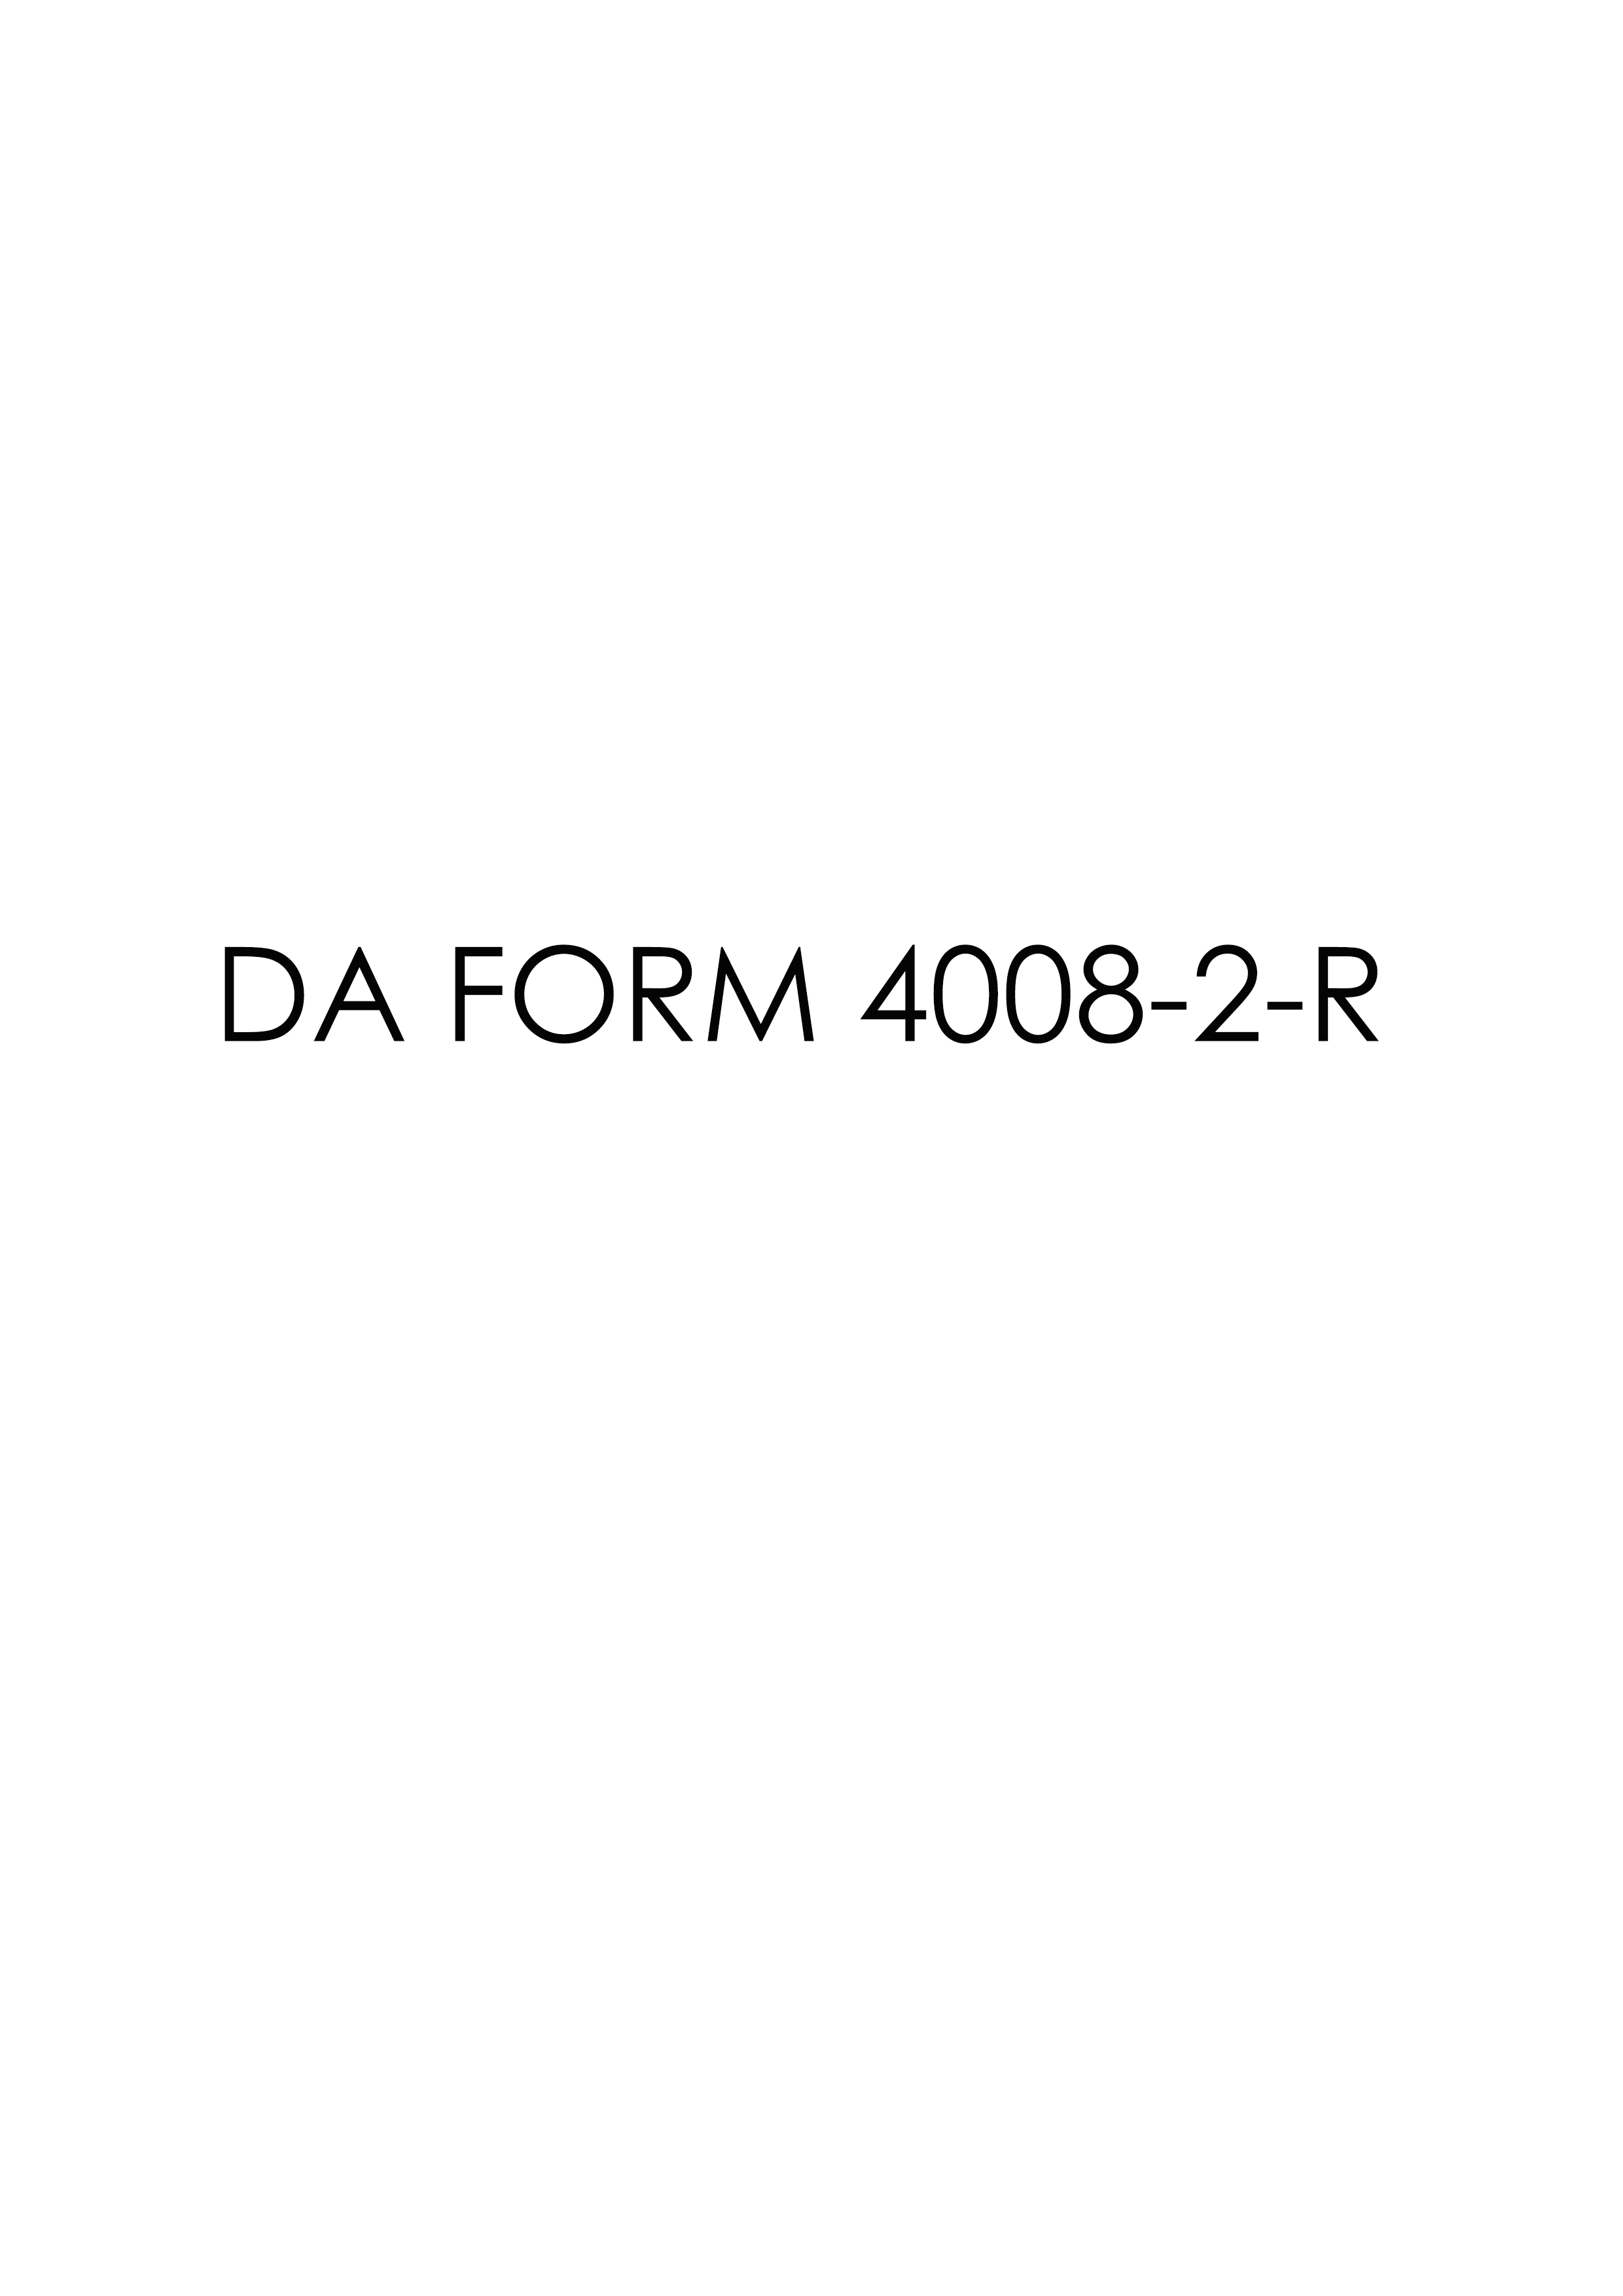 da Form 4008-2-R fillable